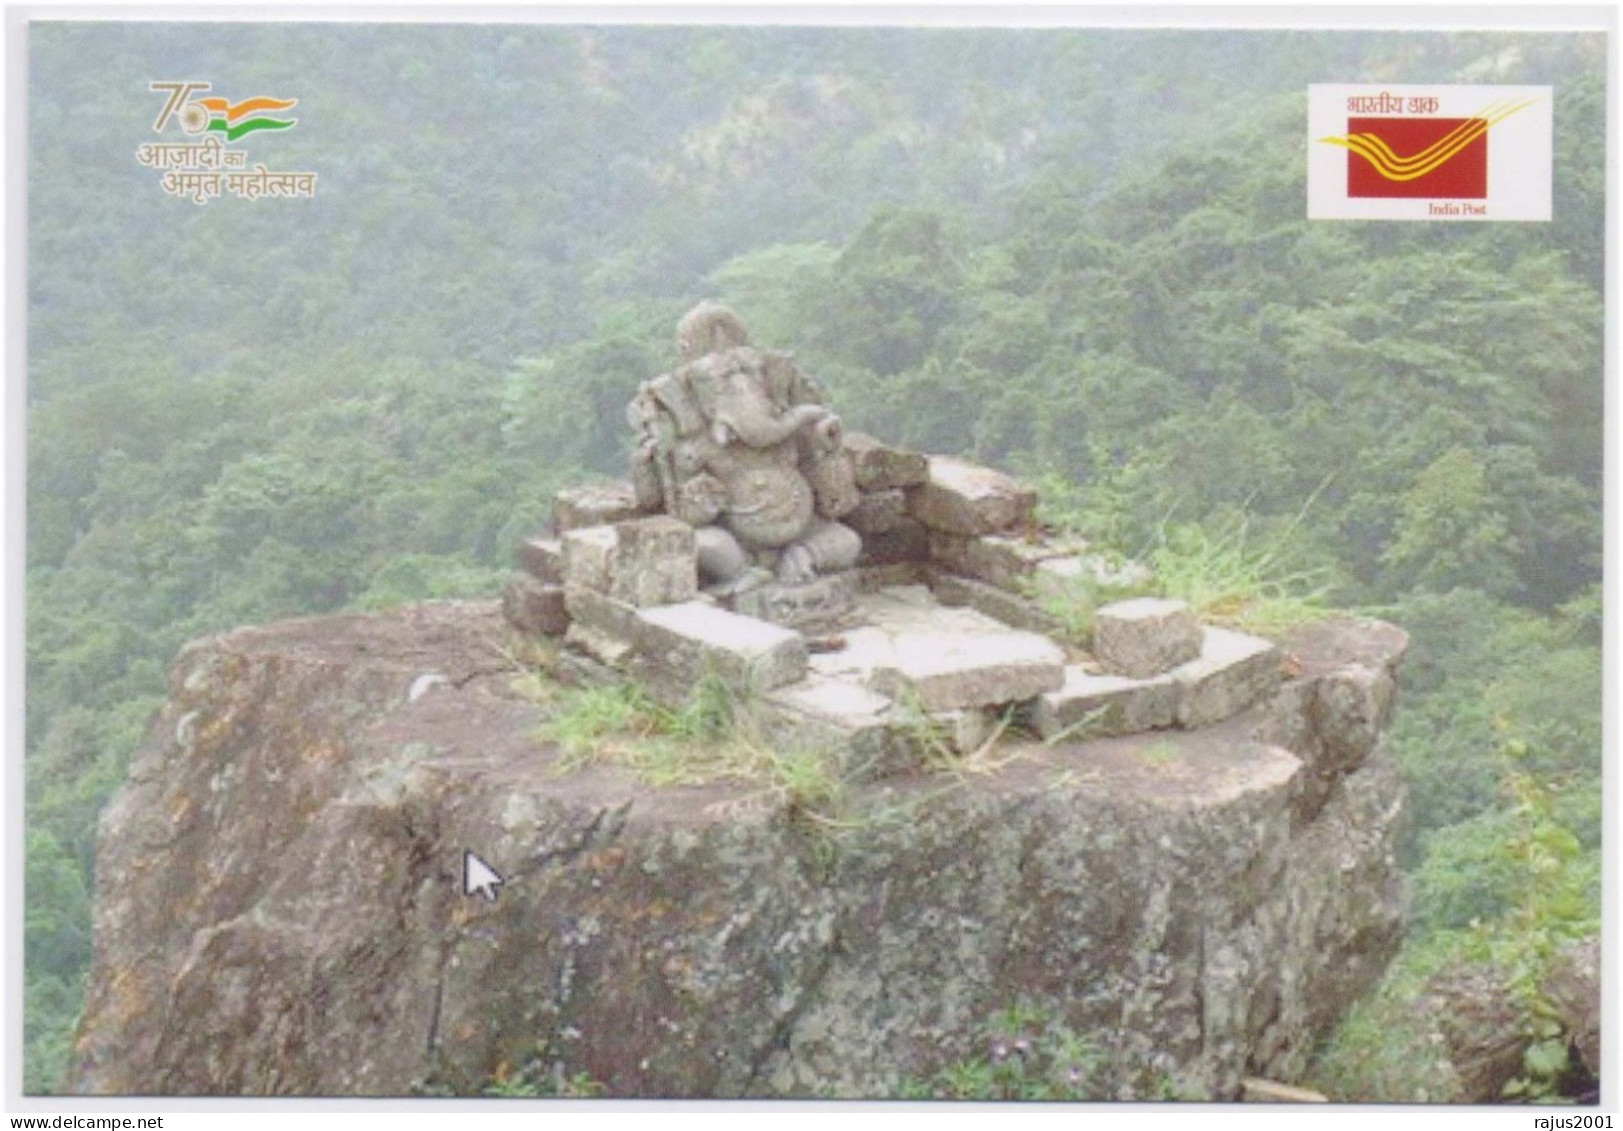 Dholkal Ganesh Temple, Shaktipeeth, Hindu God Ganesha, Located In Mountain, Hinduism, Hindu Mythology, Postal Card India - Hinduism